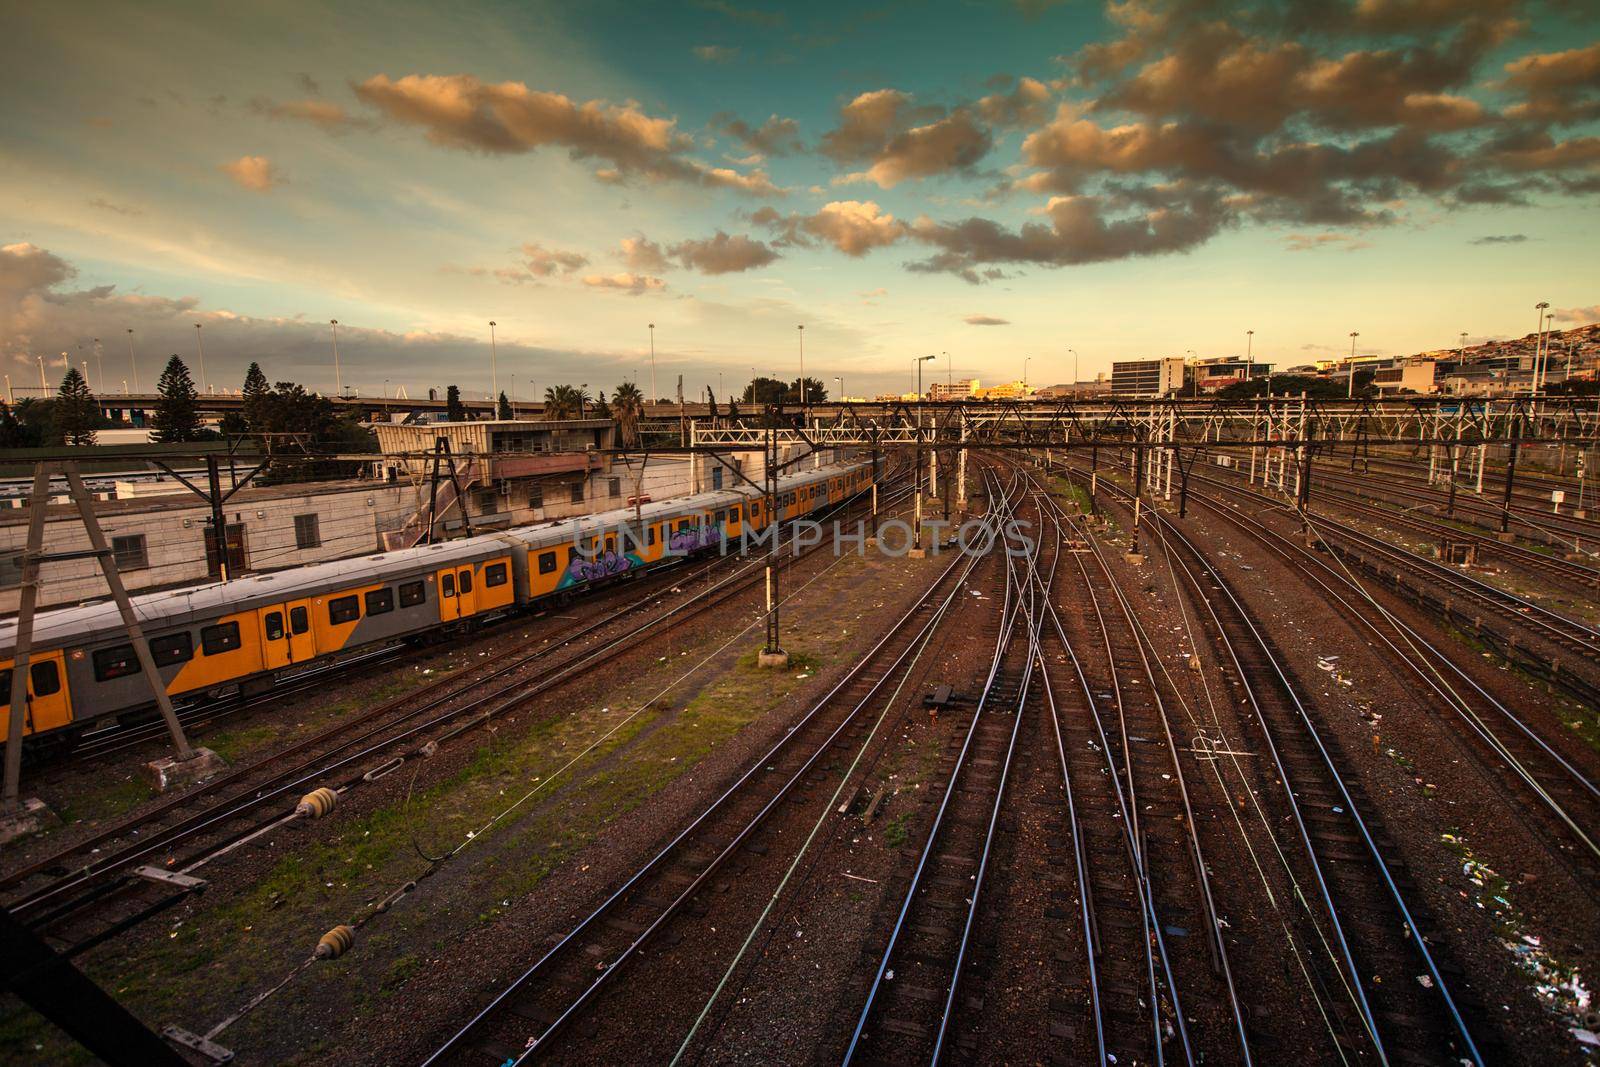 A high angle shot of a railway.